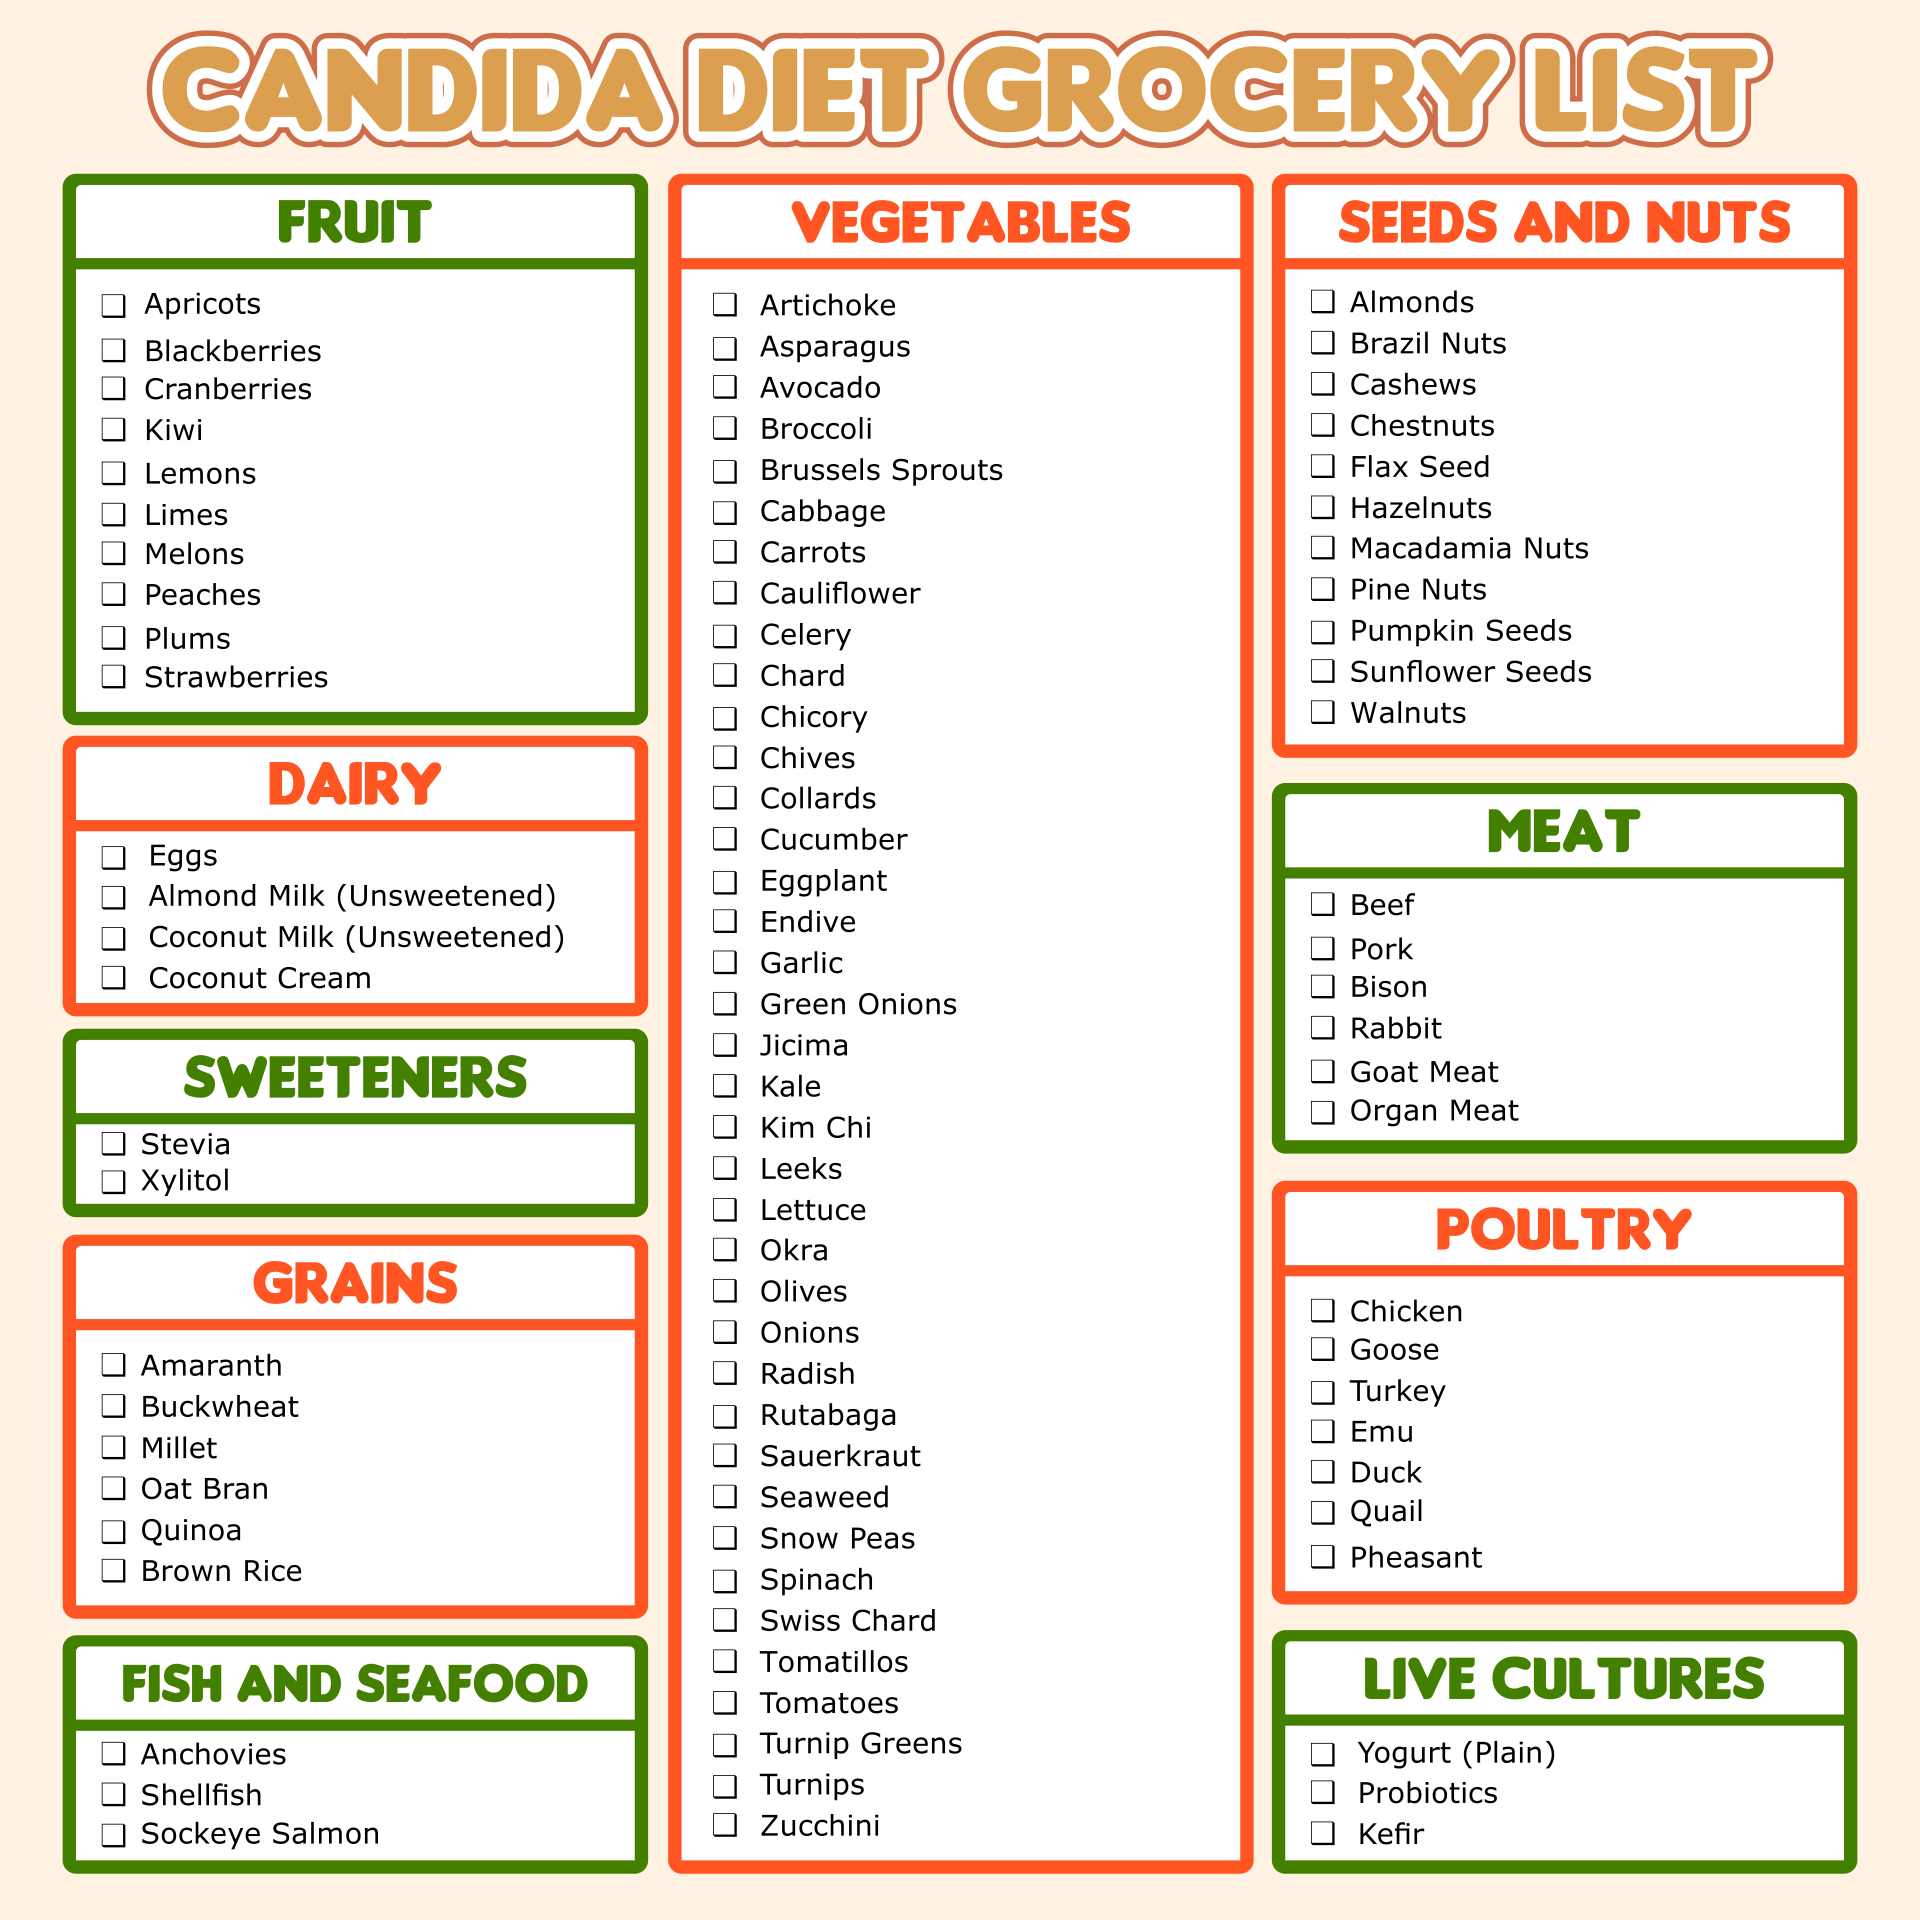 Candida Diet Grocery List